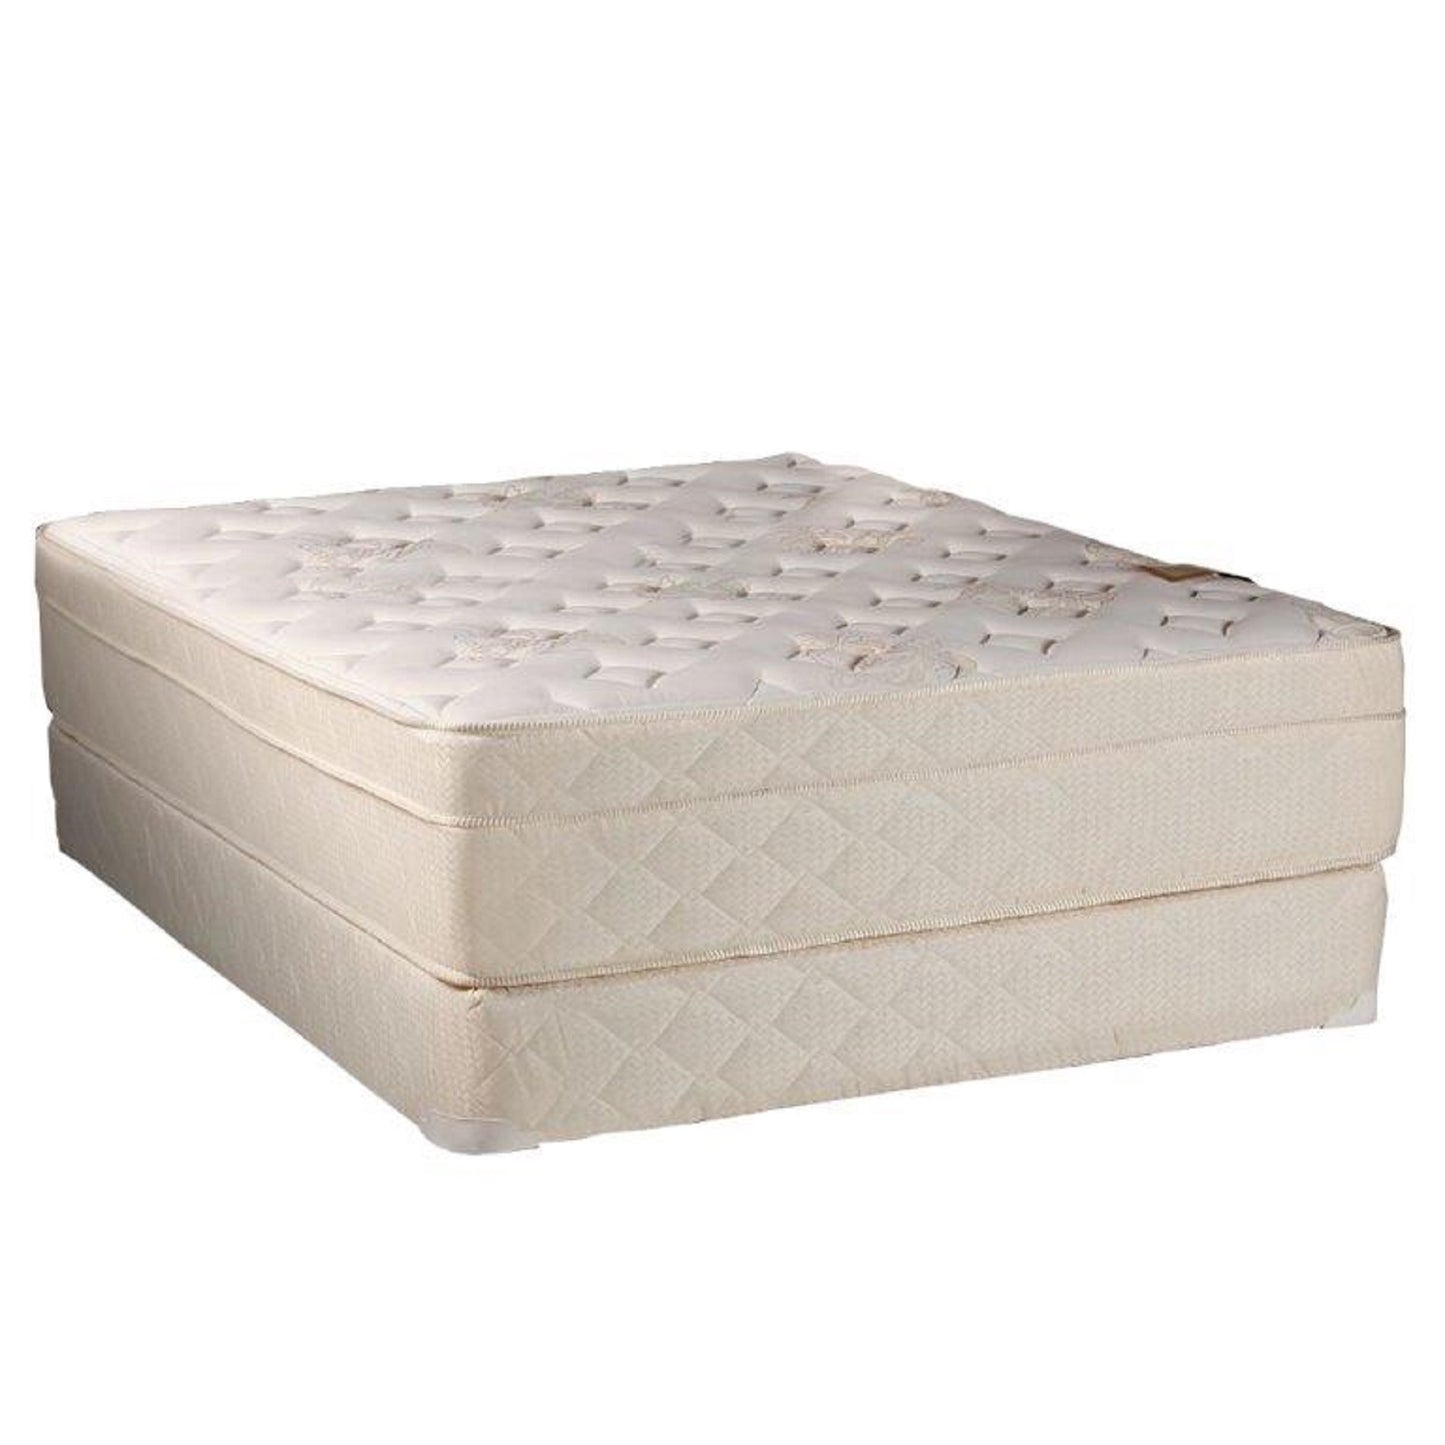 Beverly Hills Firm Foam Encased Eurotop (Pillow Top) Queen Size Mattress and Box Spring Set